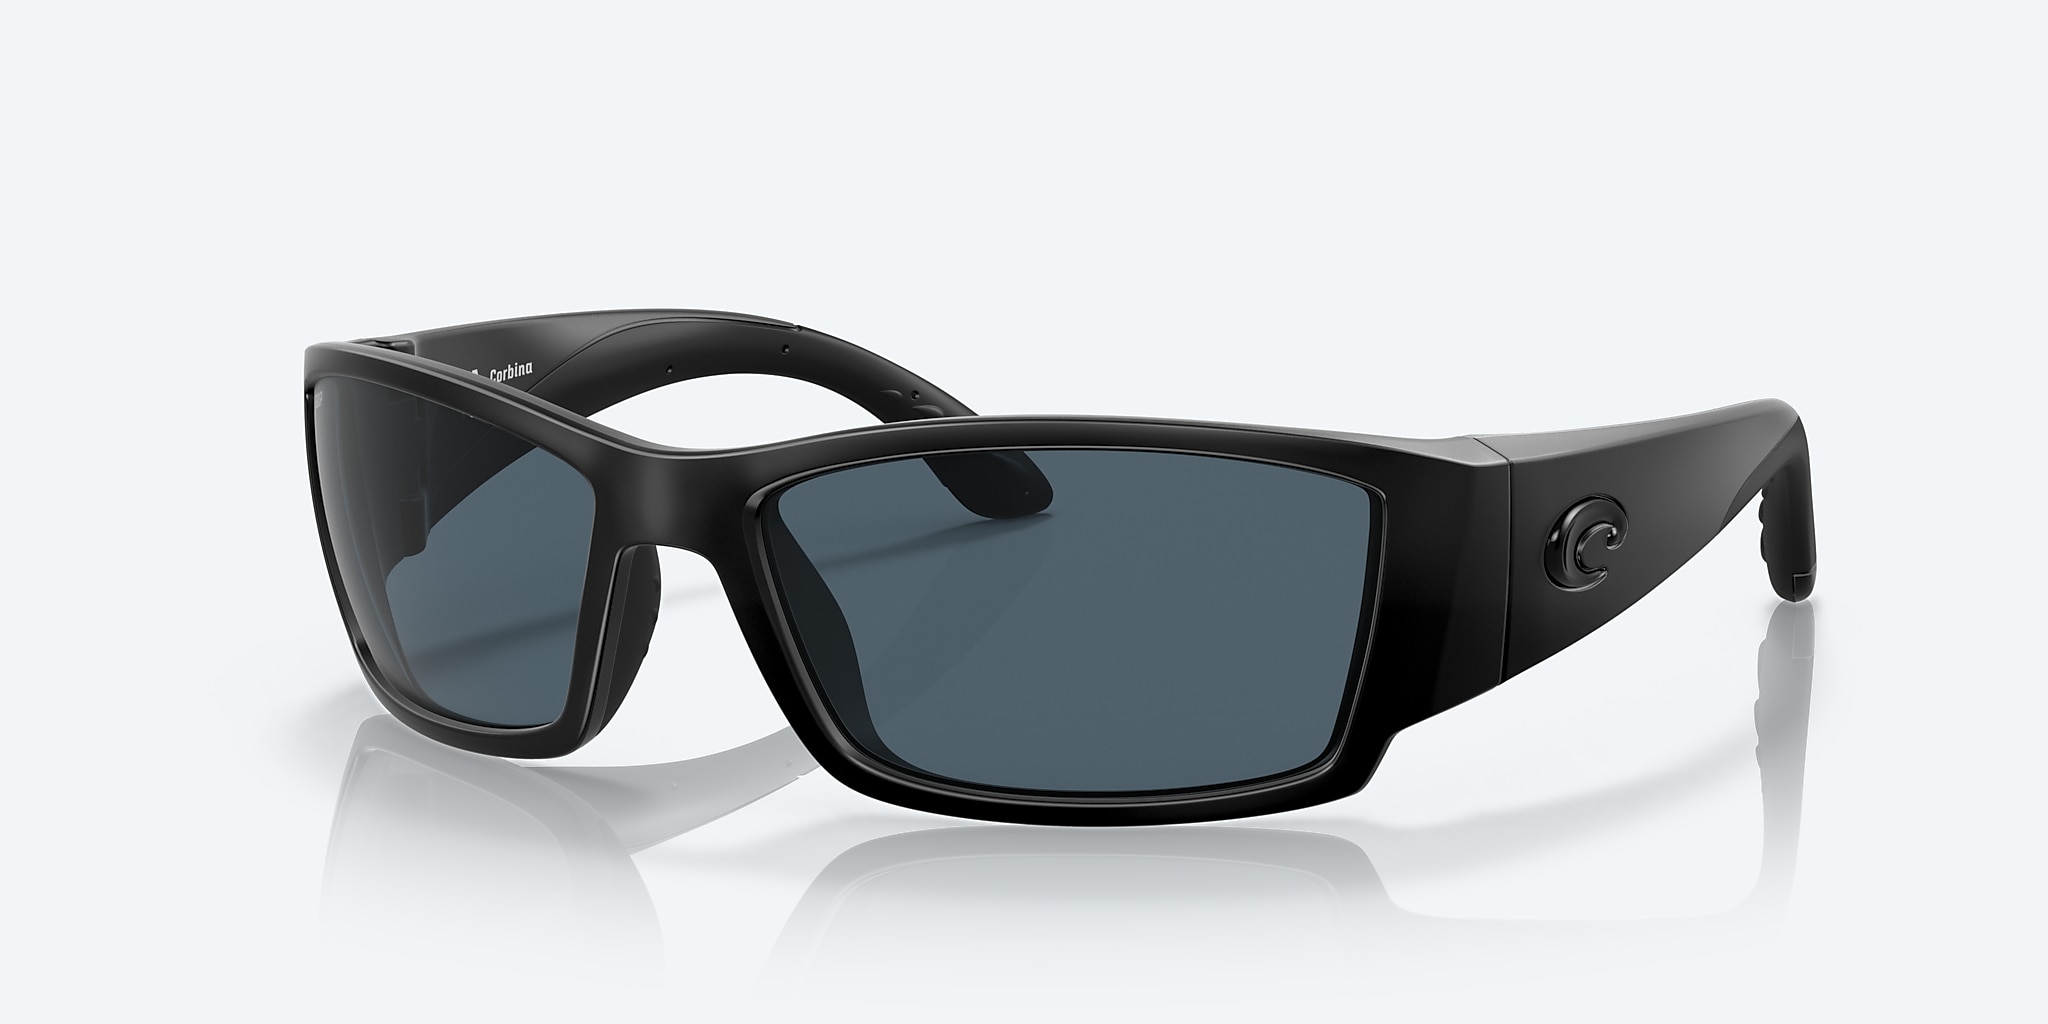 Corbina Polarized Sunglasses in Gray